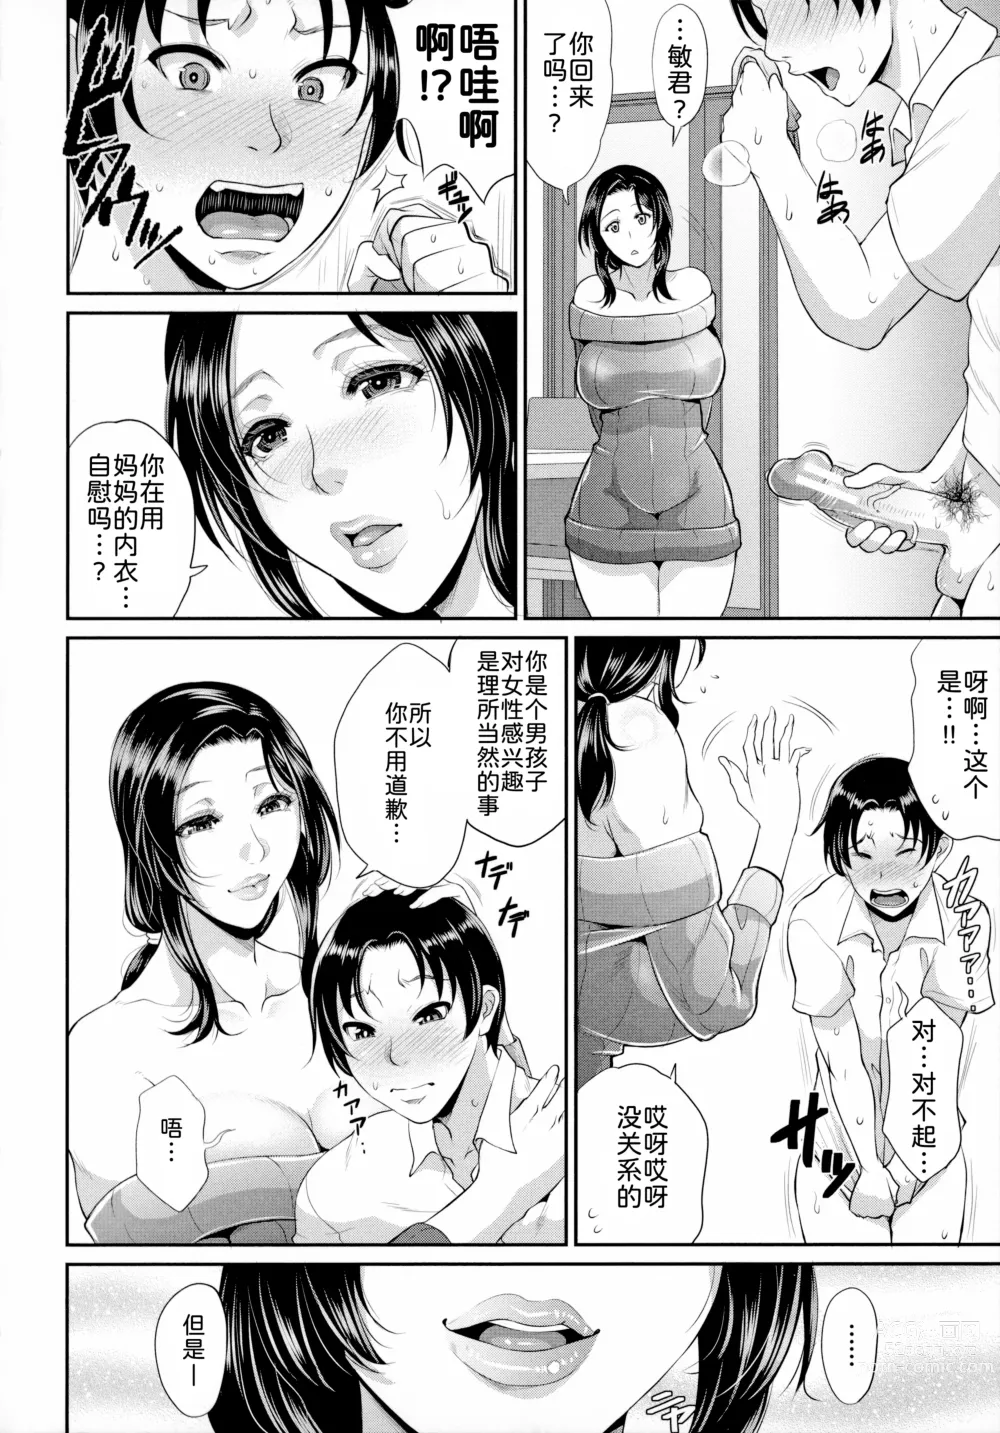 Page 9 of manga Uruwashi no Wife